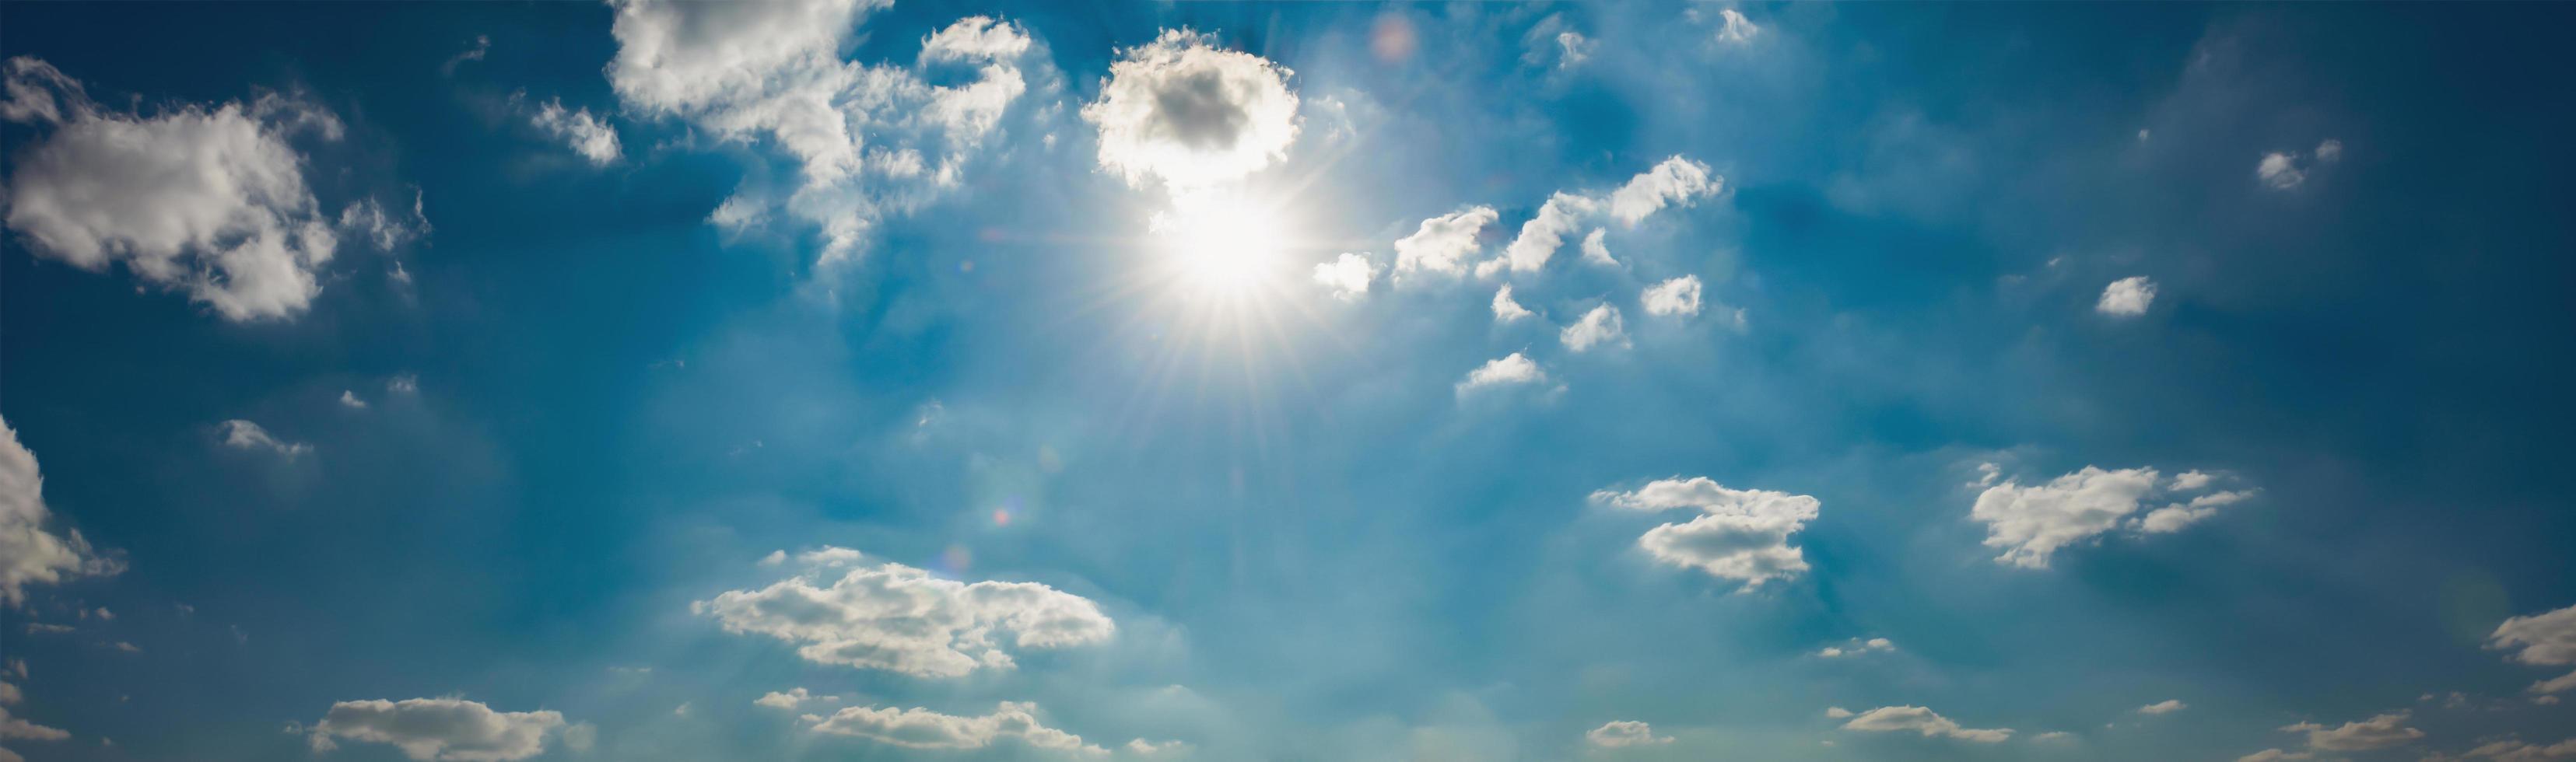 panorama blauw lucht met zon en wit wolk foto